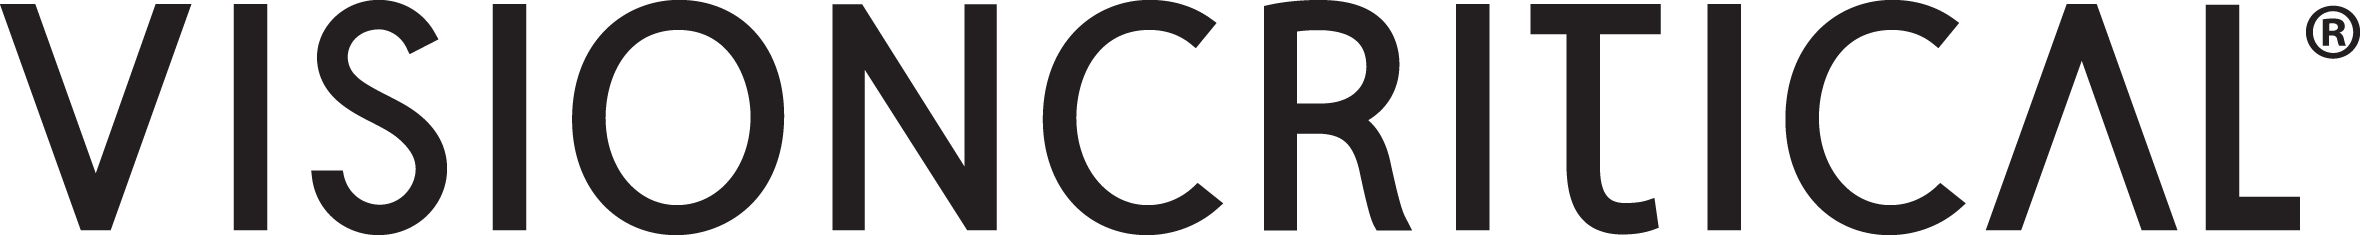 Vision Critical logo